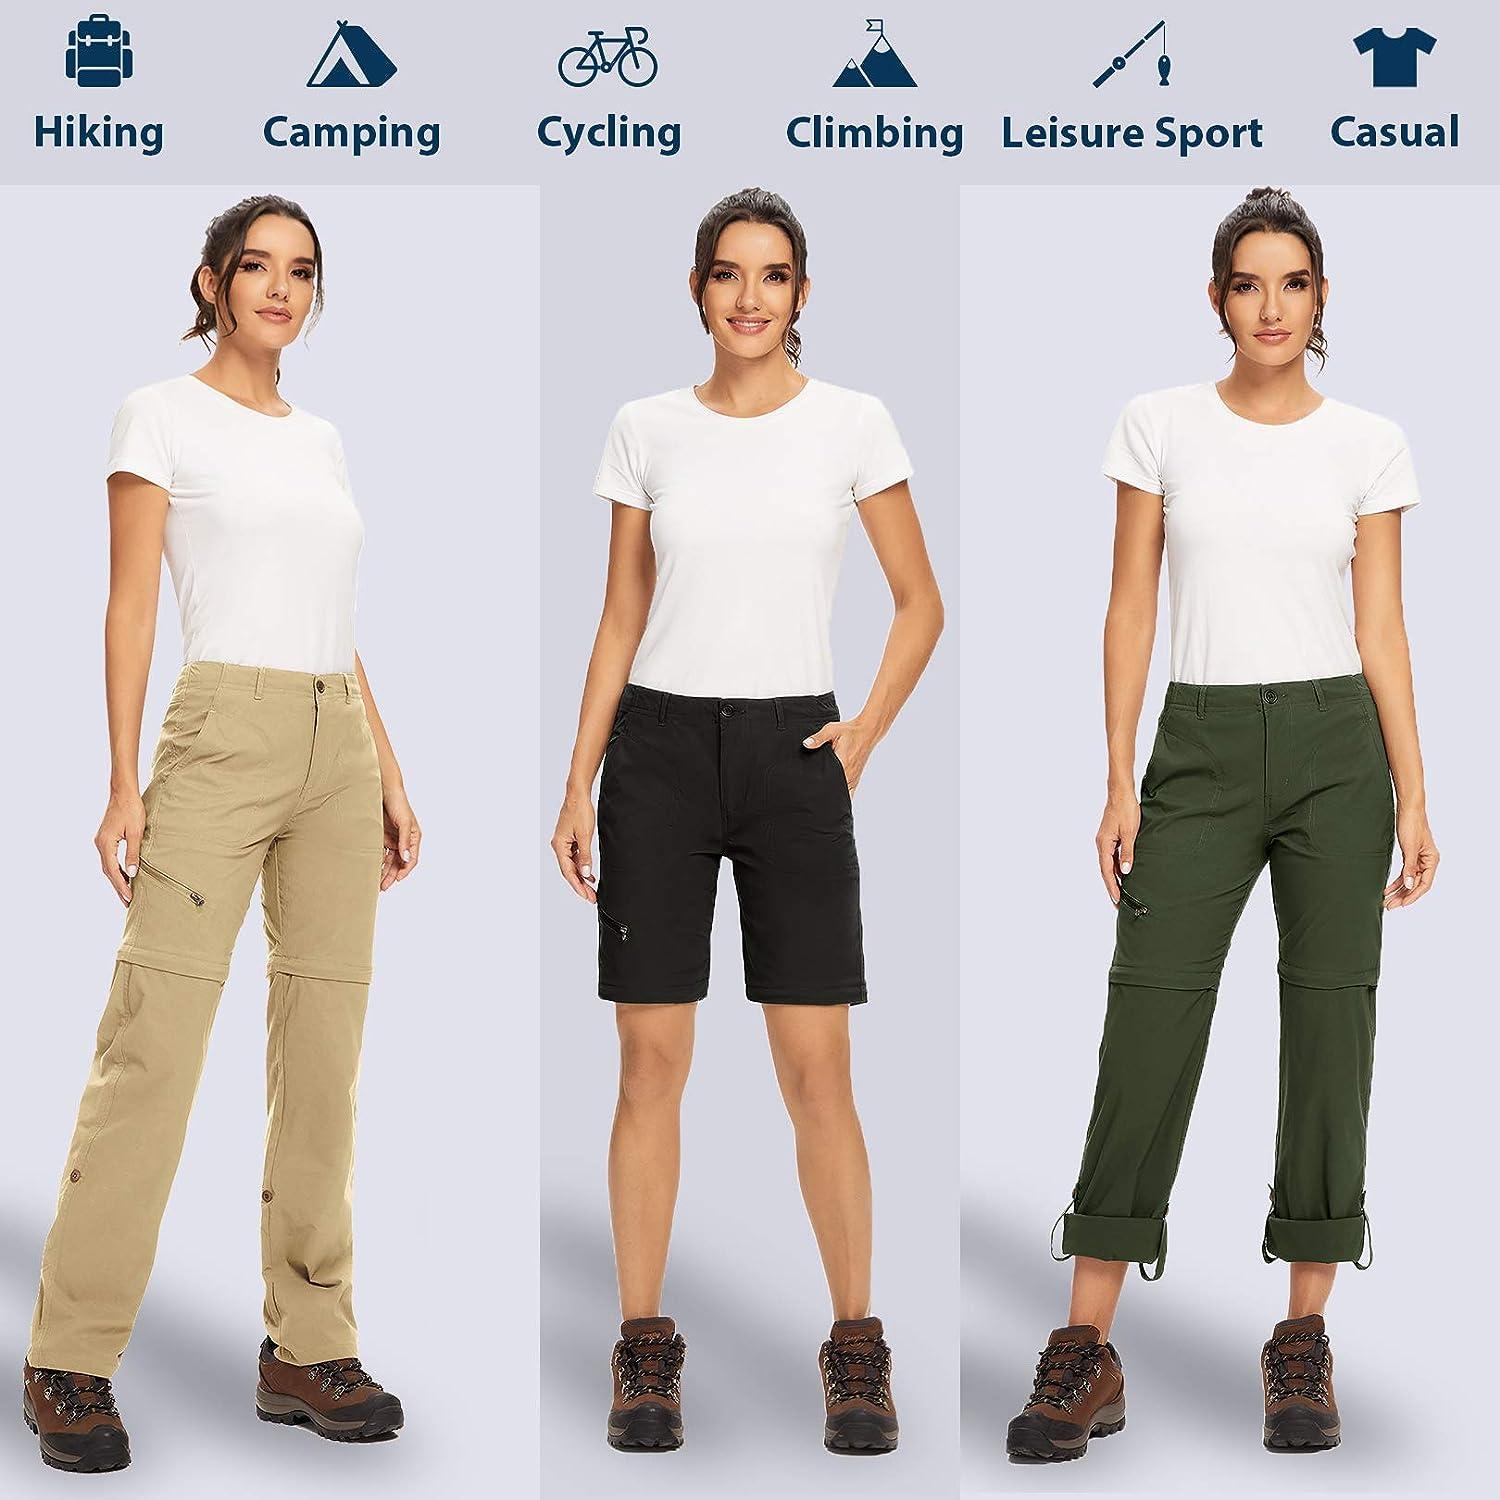 Women's Hiking Pants Convertible Quick Dry Lightweight Outdoor UPF 40  Fishing Safari Waterproof Travel Camping Capri Pants 14 Khaki